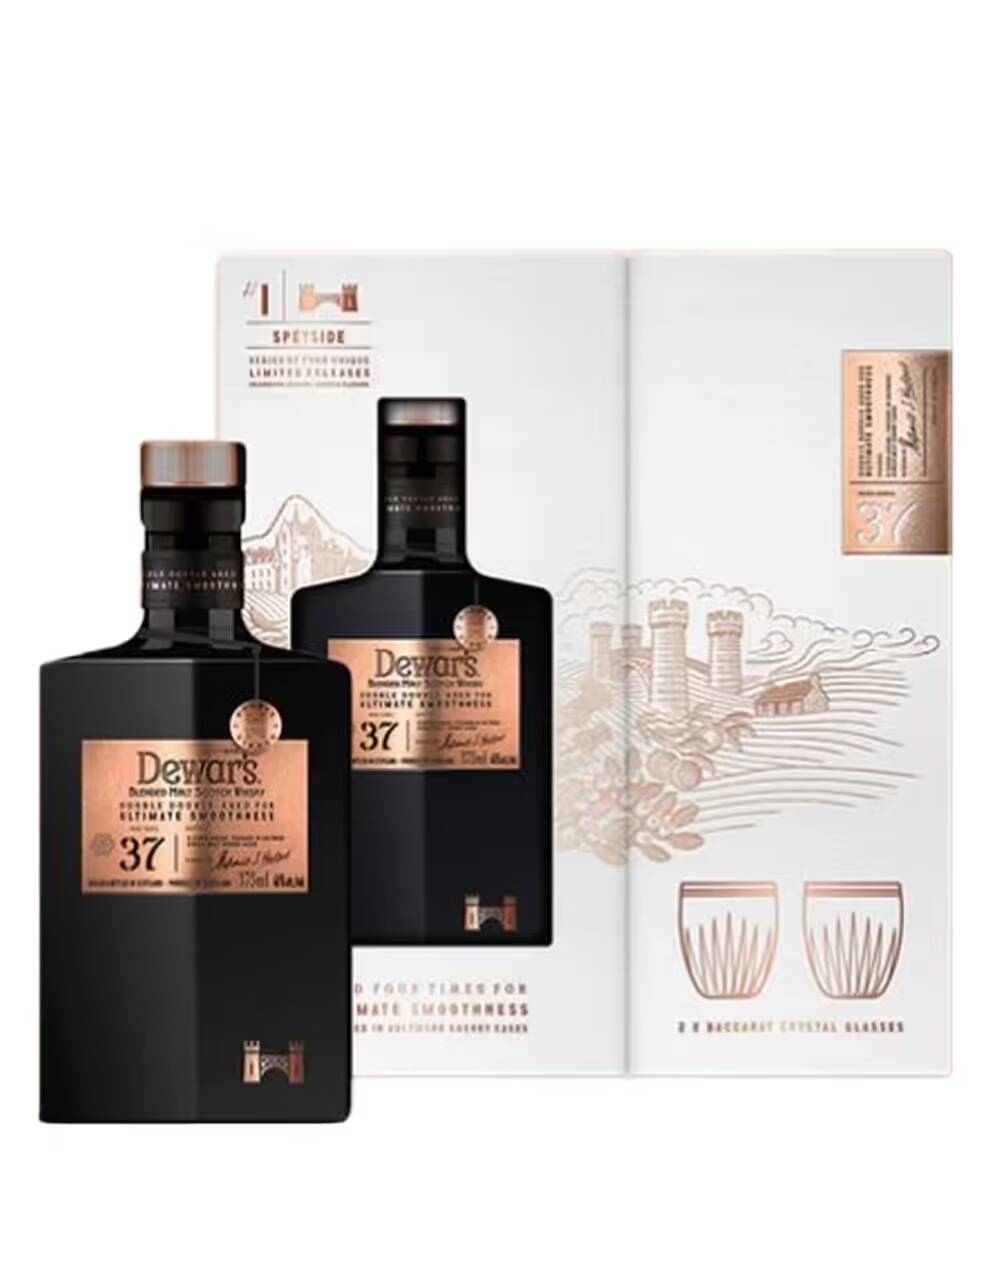 Dewars 37 Year Blended Scotch Whisky 375ml Gift Set